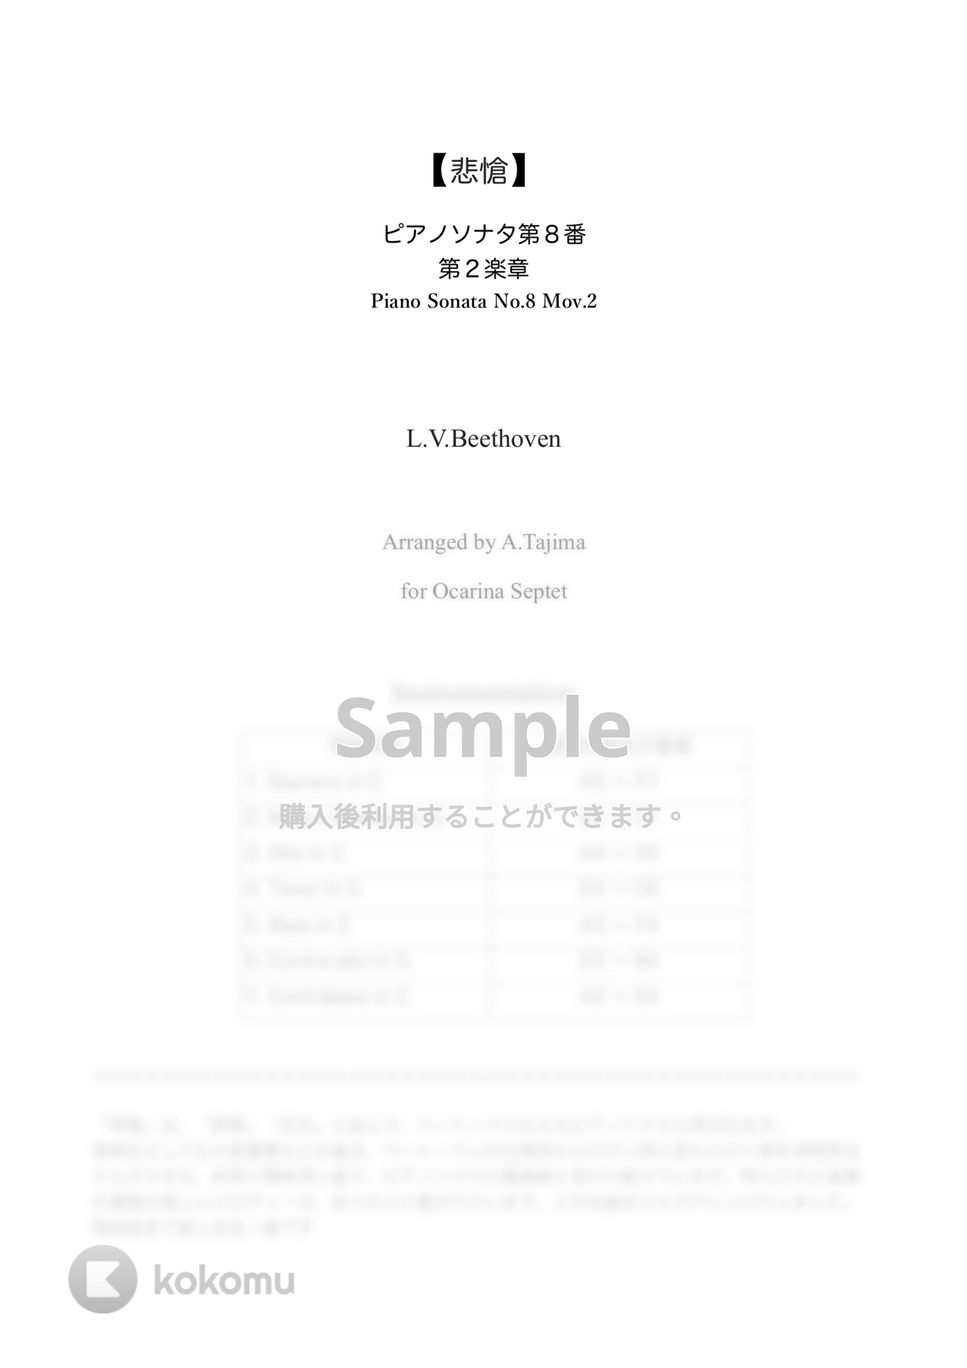 L.V.Beethoven - 「悲愴」より第2楽章(Piano Sonata No.8 Mov.2) (オカリナアンサンブル) by 田島篤